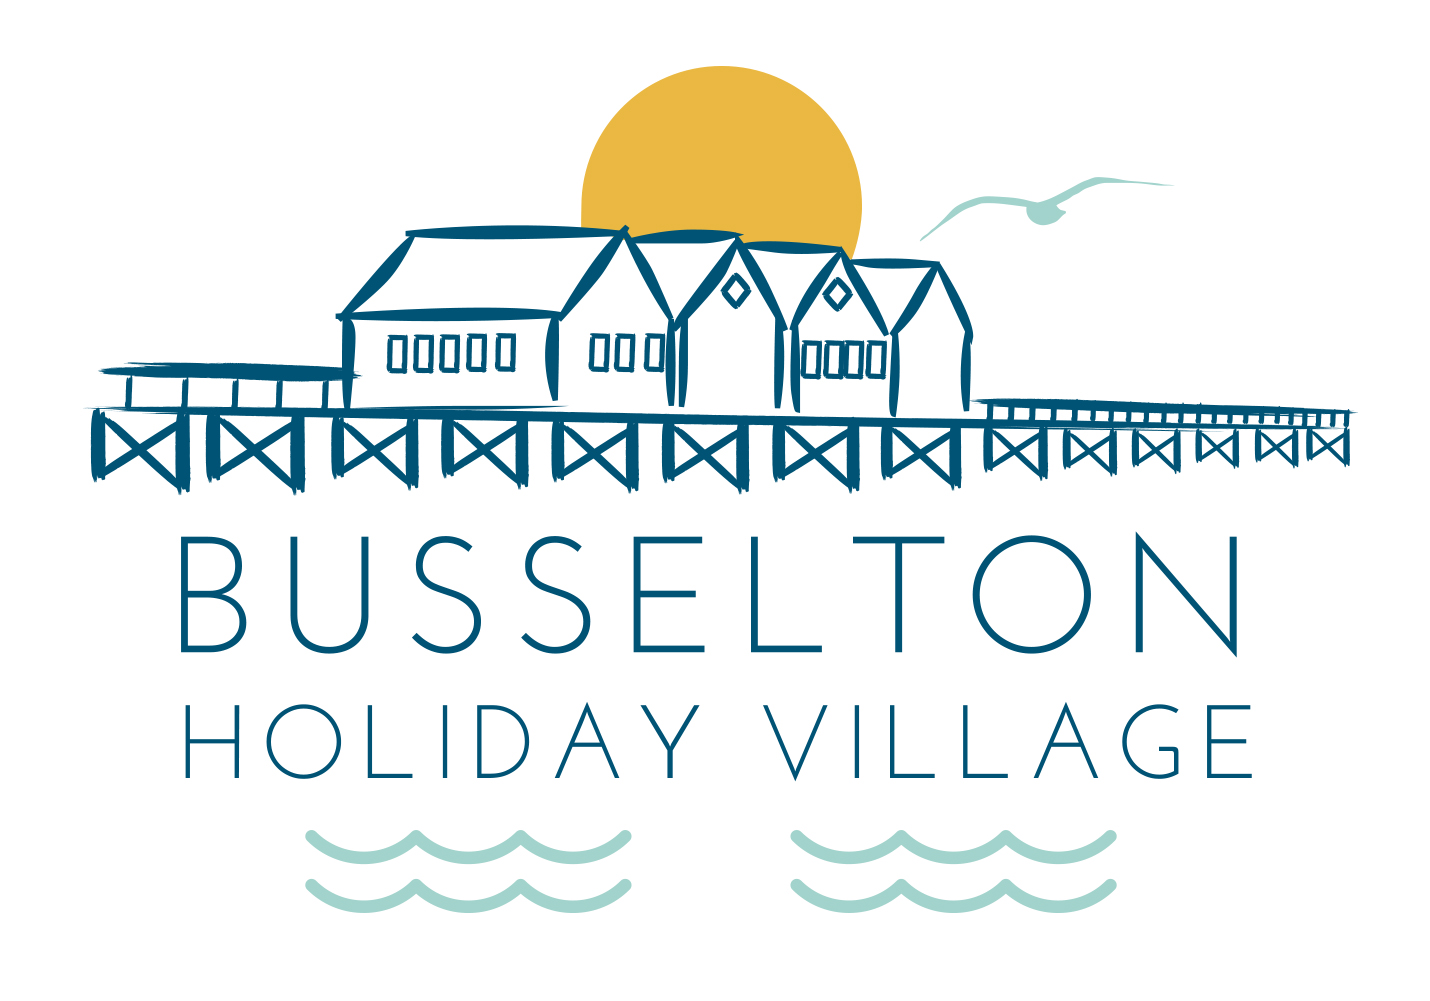 Busselton Holiday Village